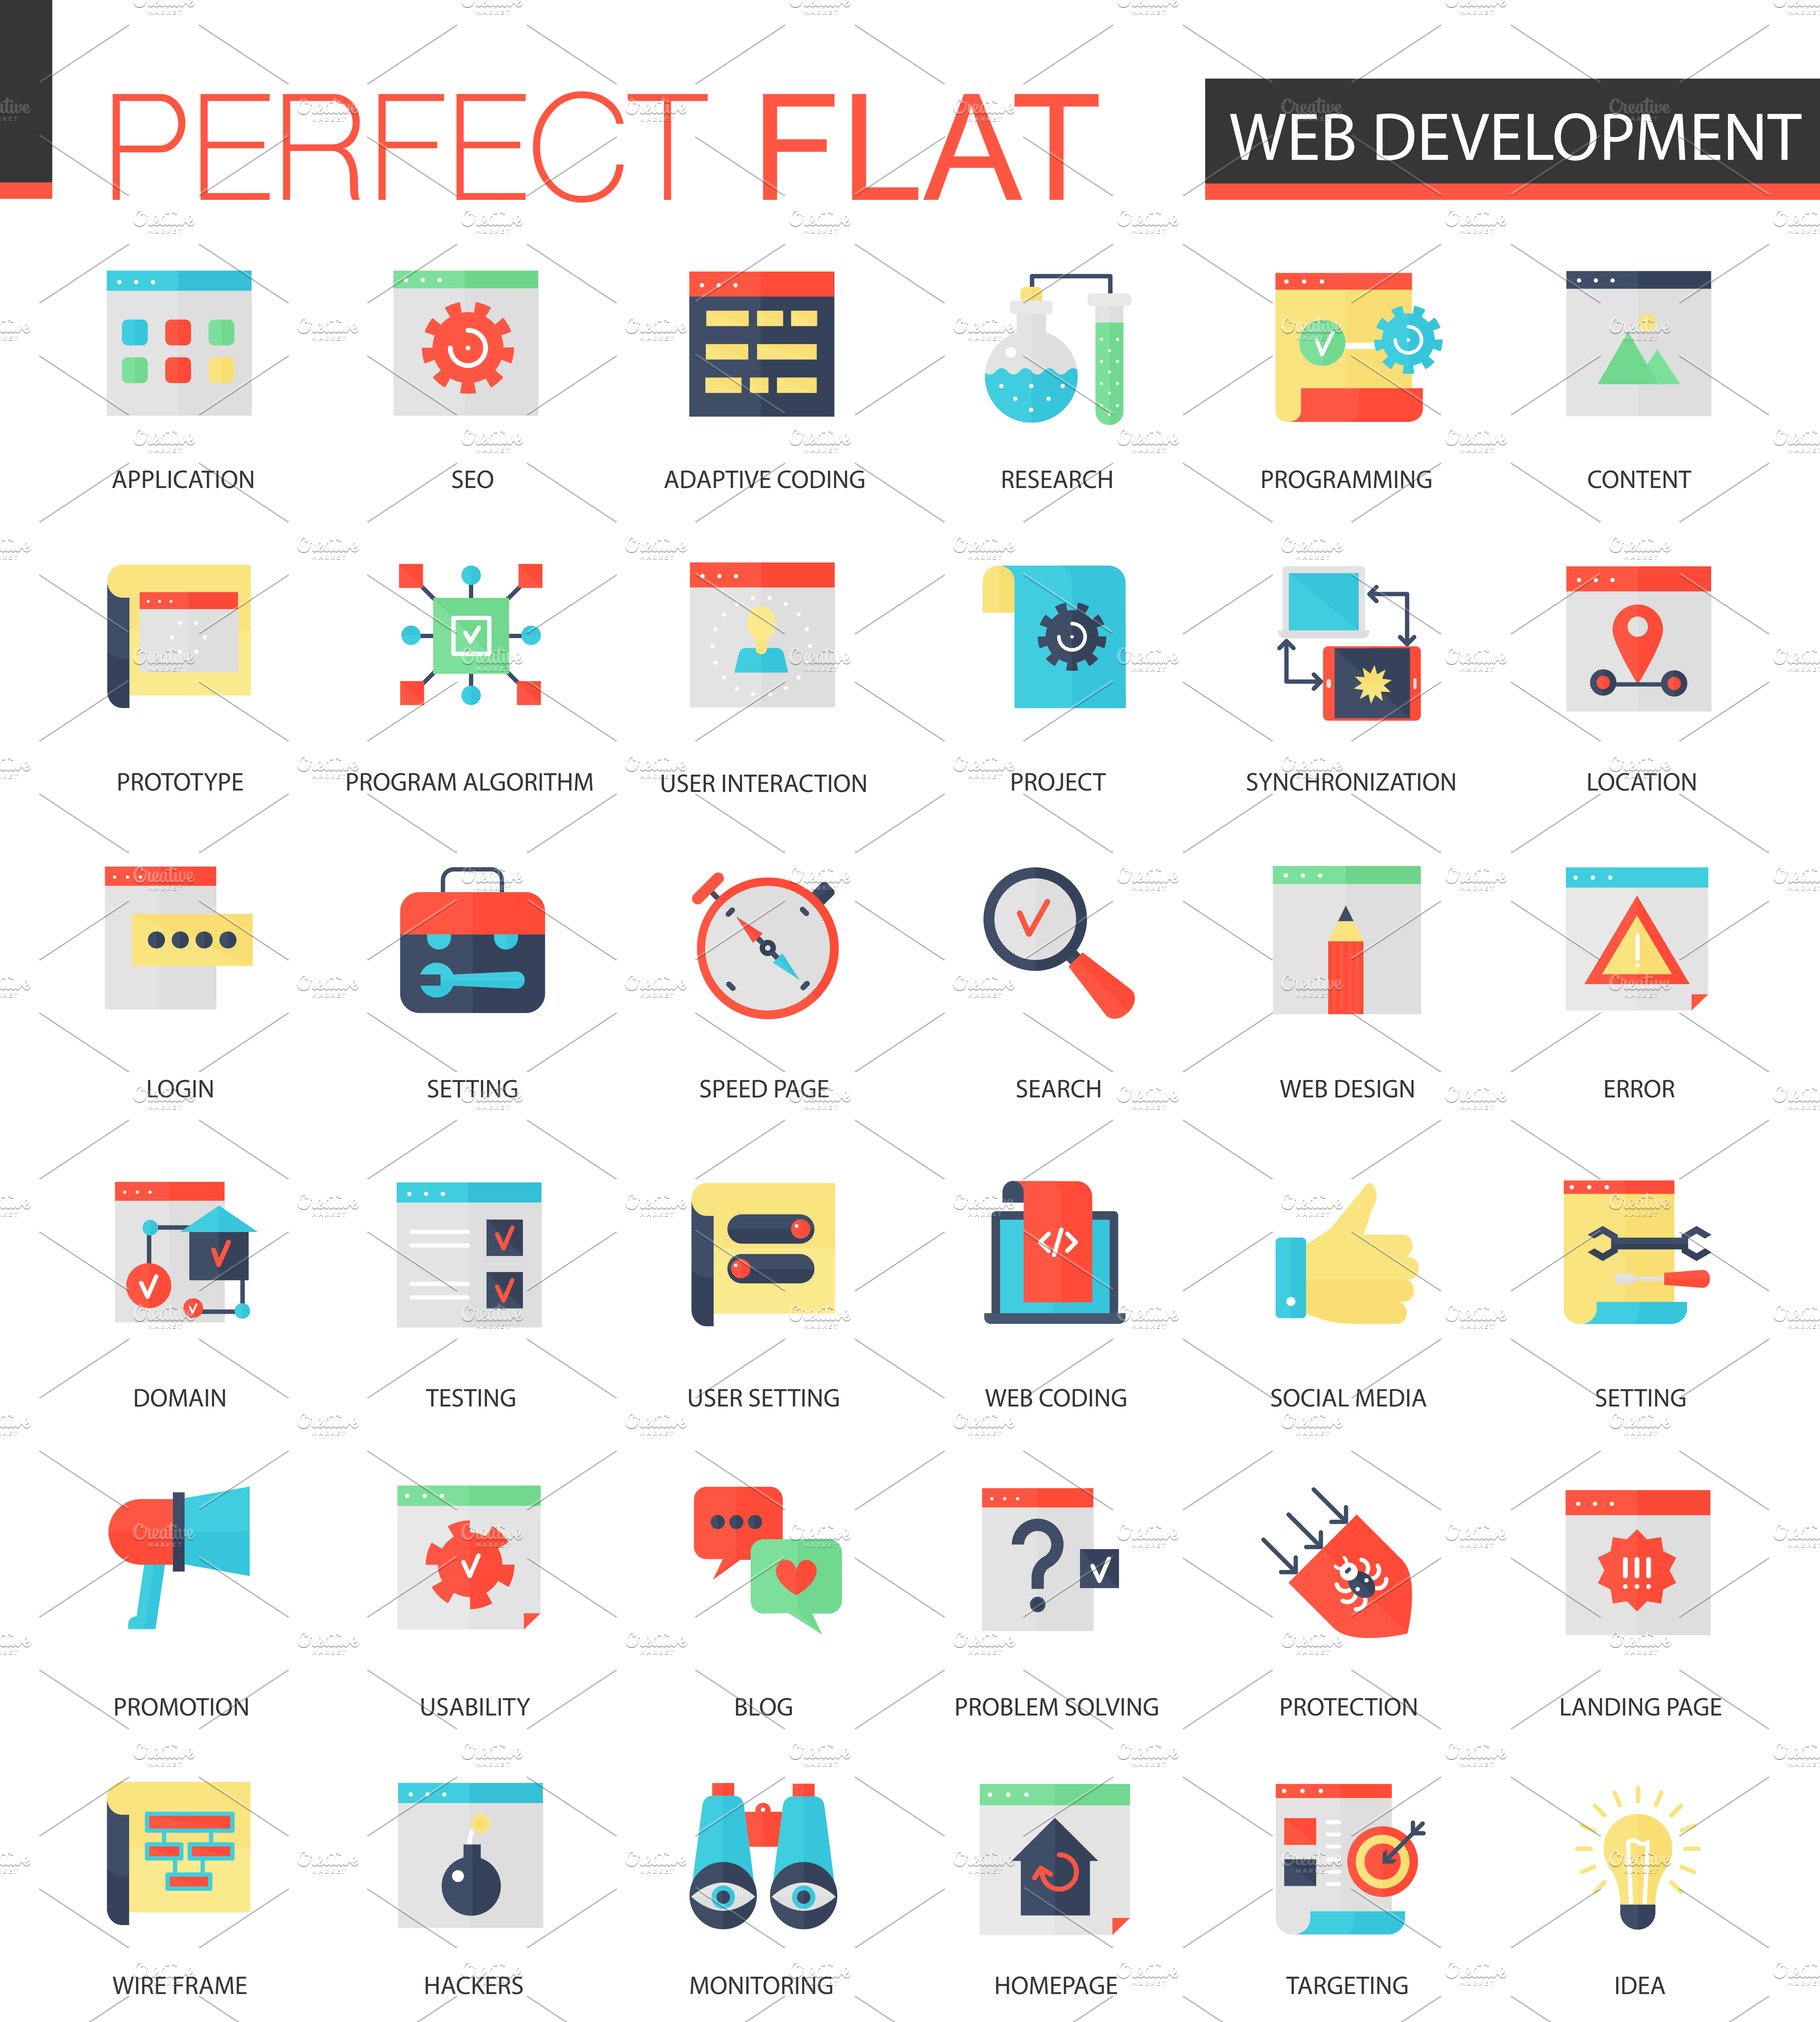 Web development icons. cover image.